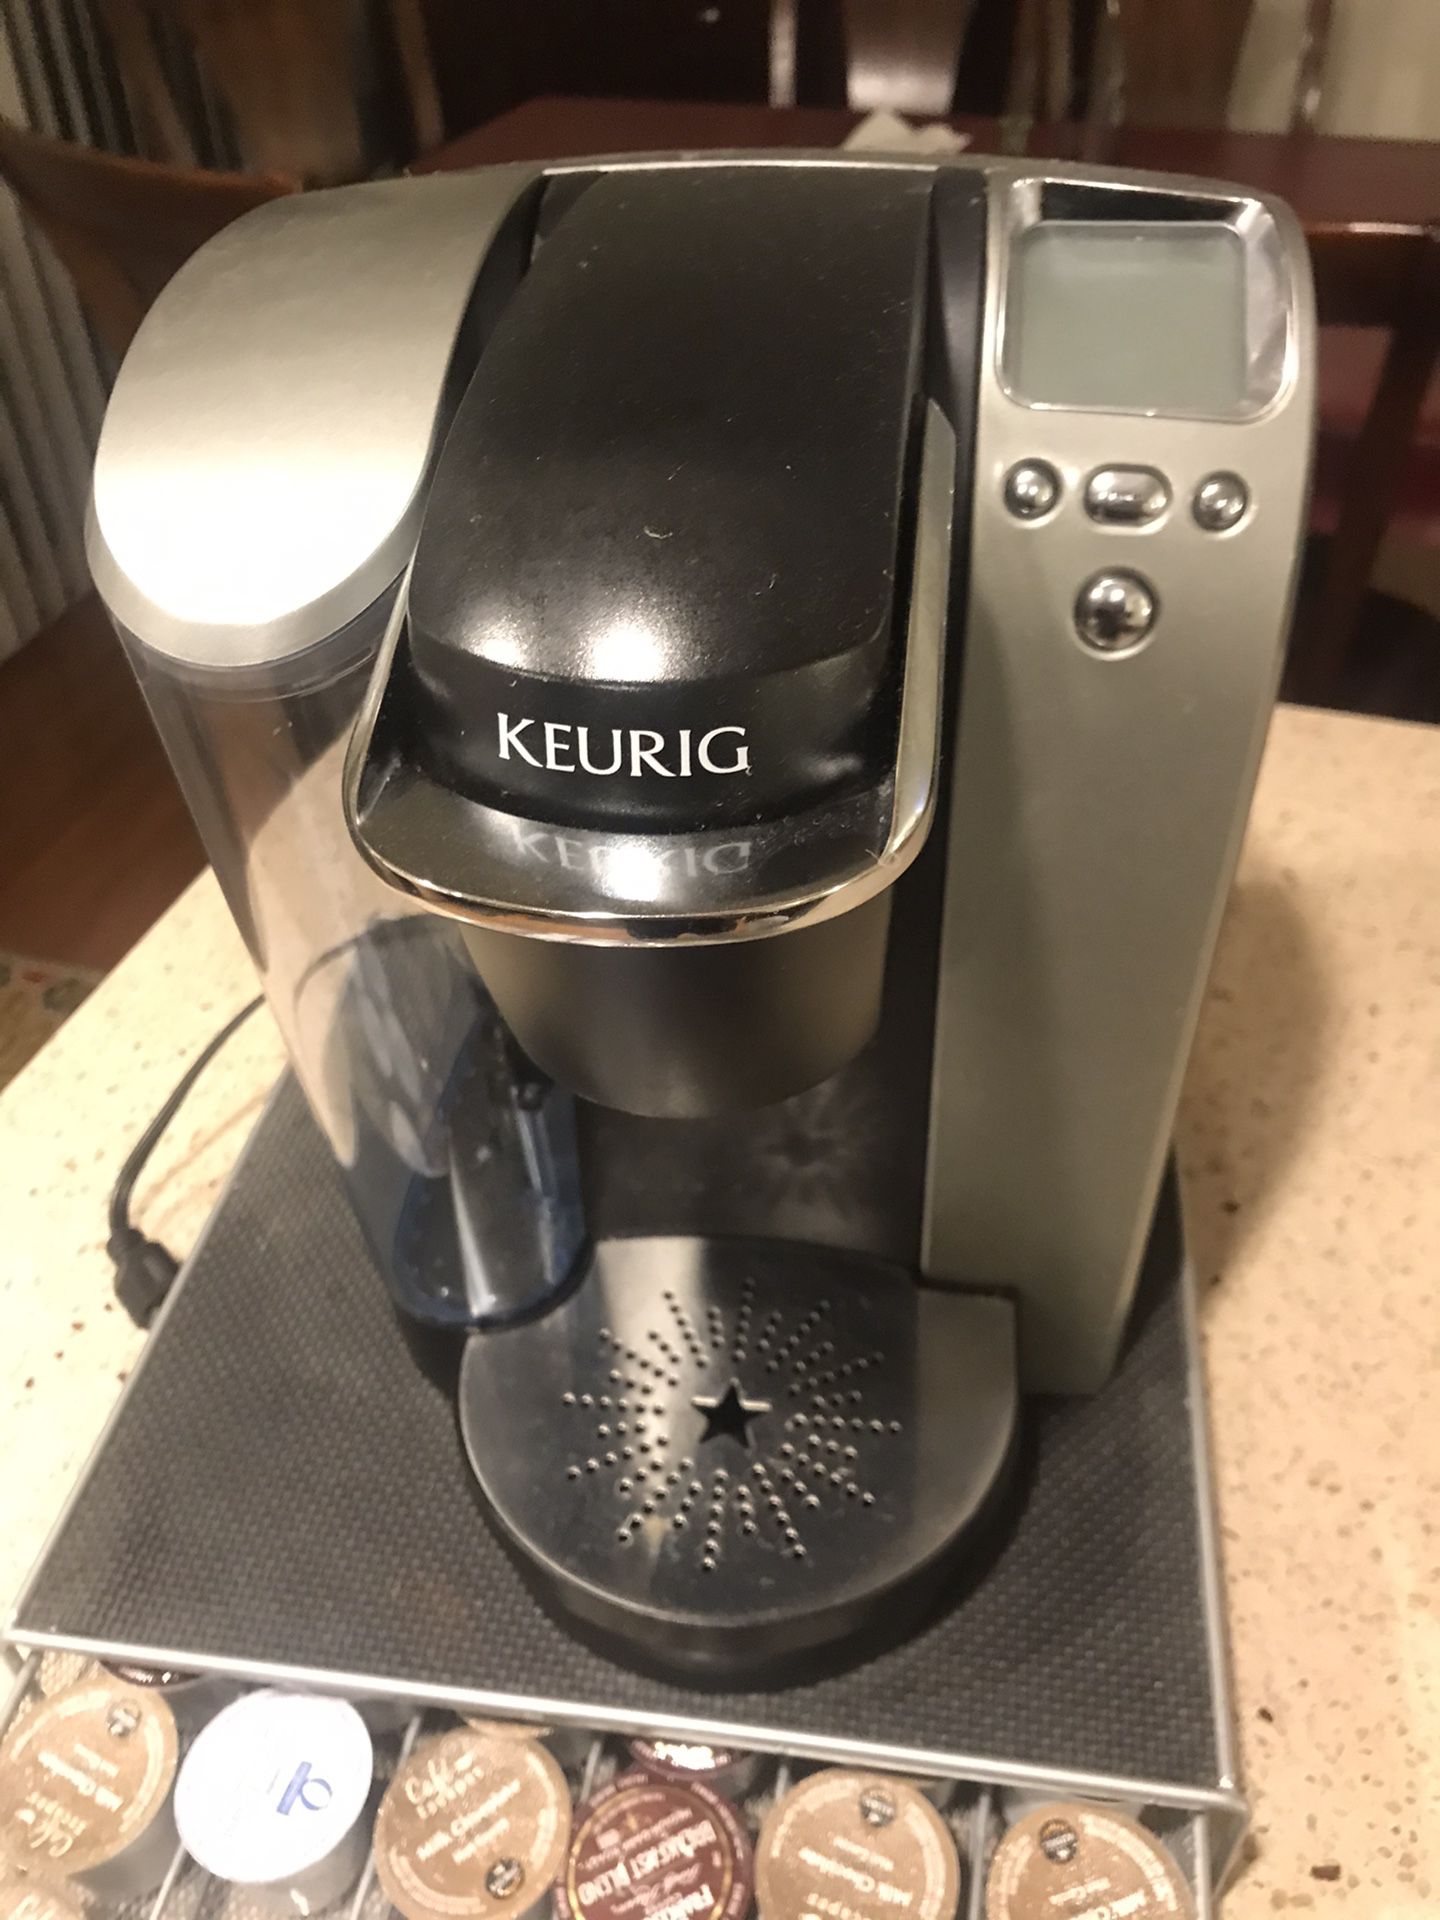 Keurig coffee maker single serve and k-cup holder (holds 36)